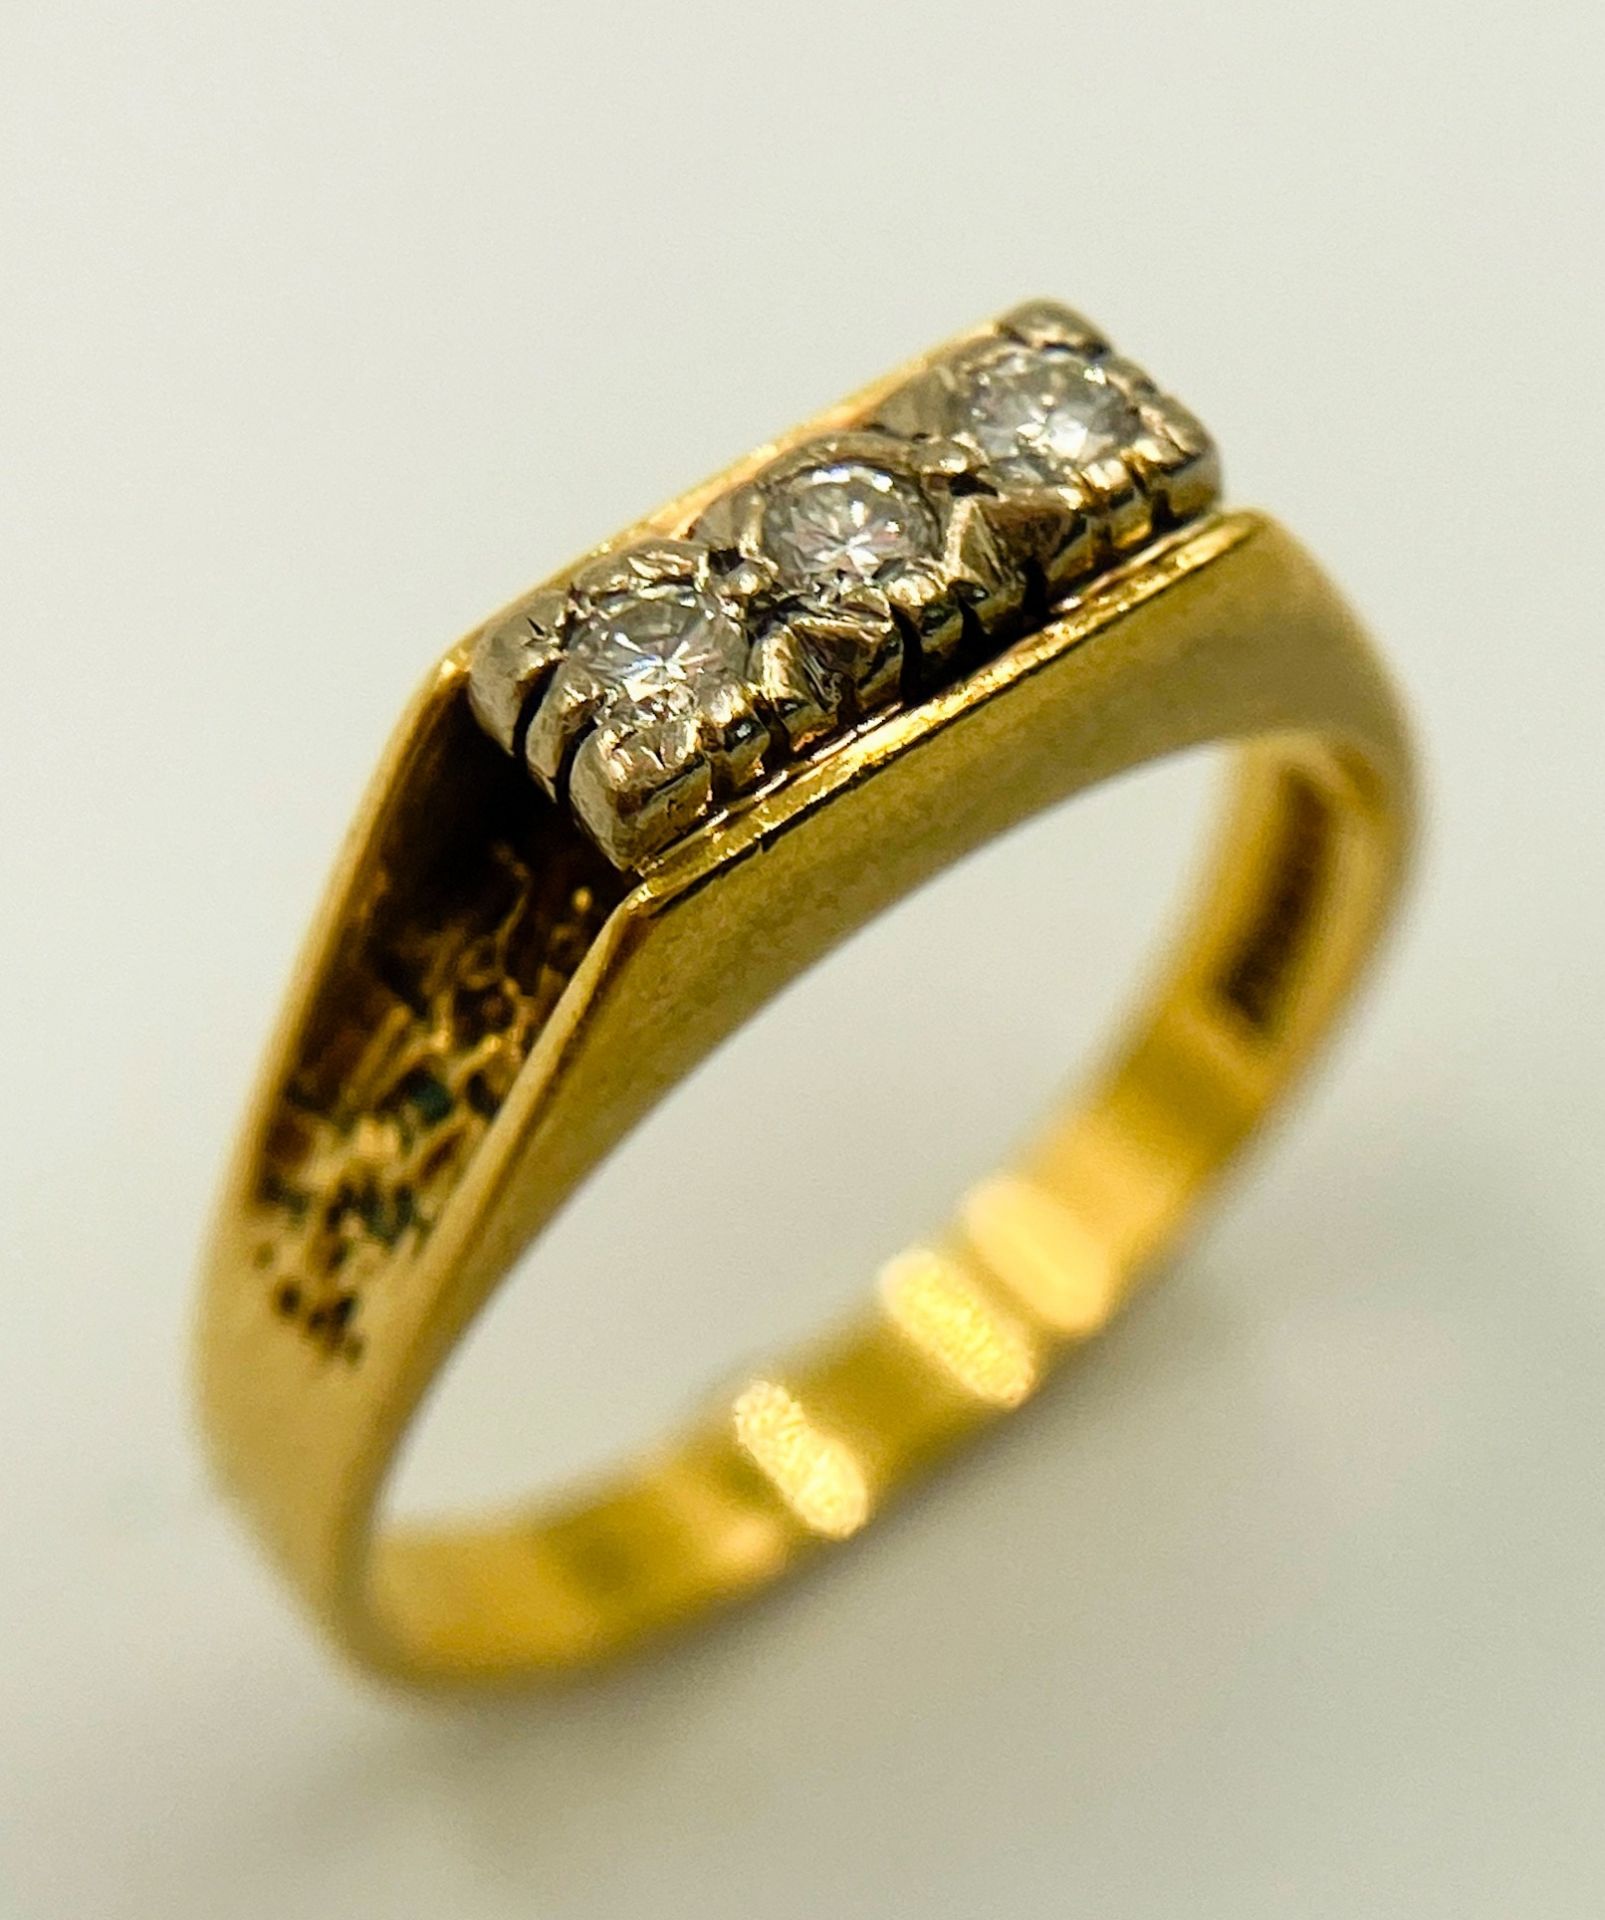 AN 18K YELLOW GOLD VINTAGE DIAMOND RING. 0.10CT. 3.5G. SIZE M.